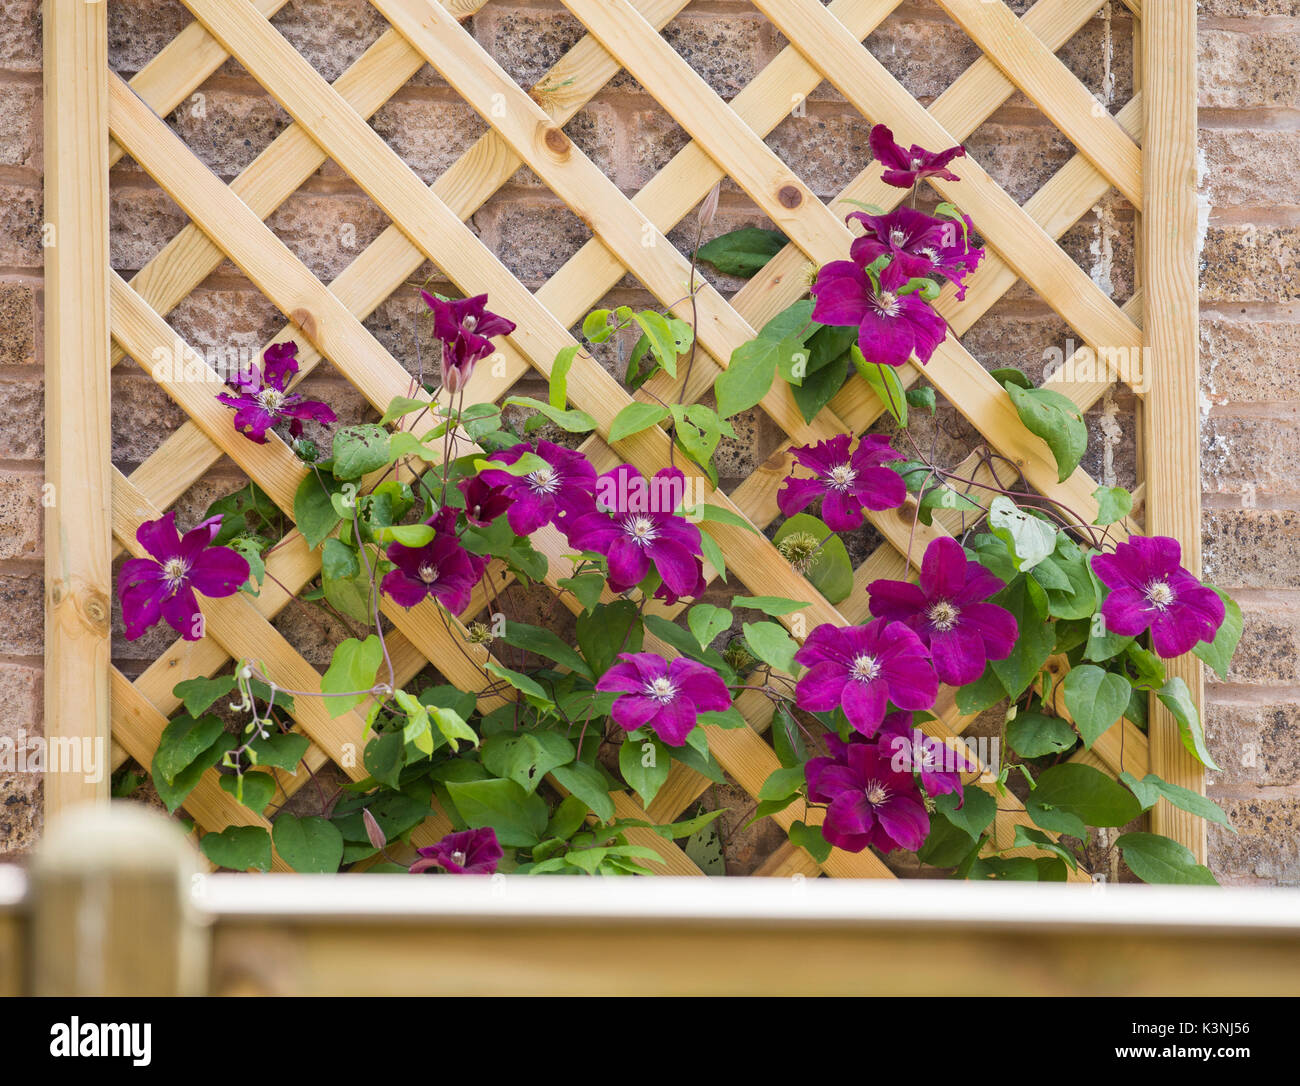 Clematis 'Etoile Violett' climbing up trellis. Stock Photo